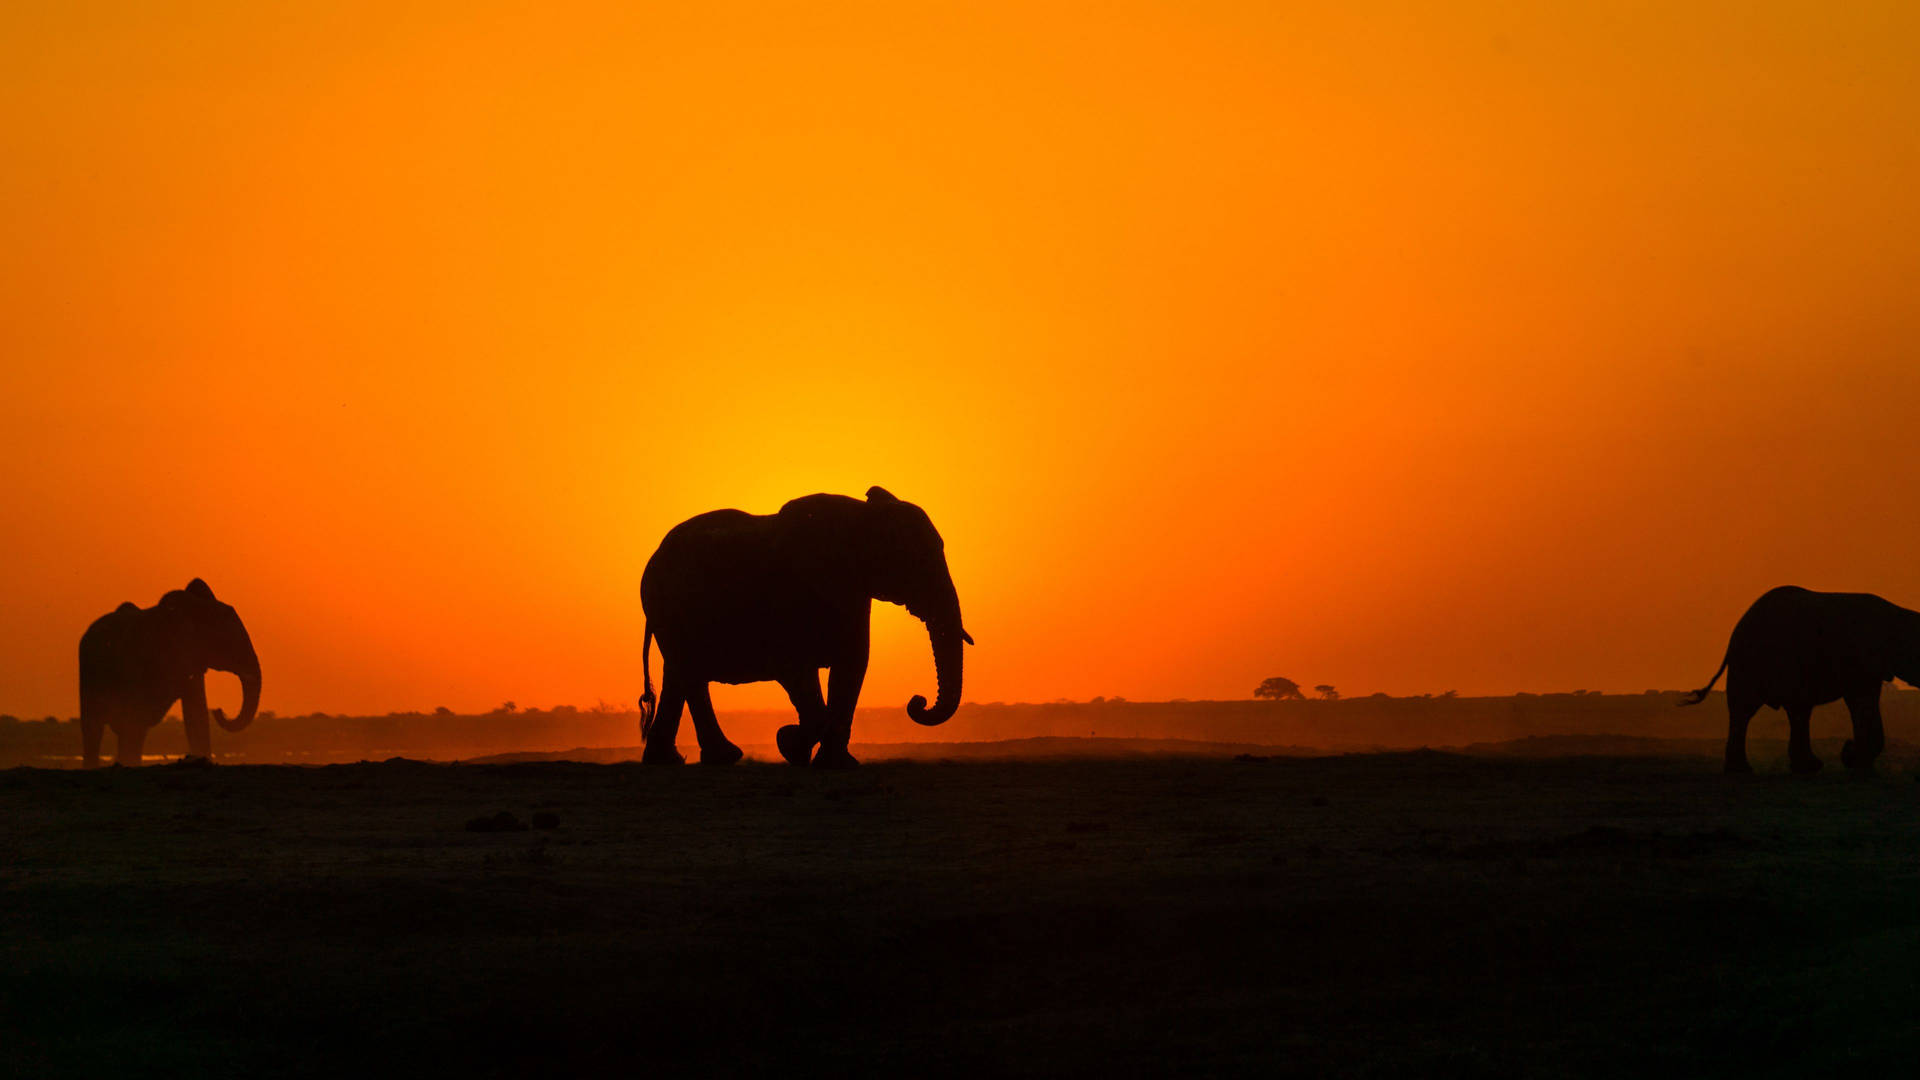 Silhouette Of Elephants Africa 4k